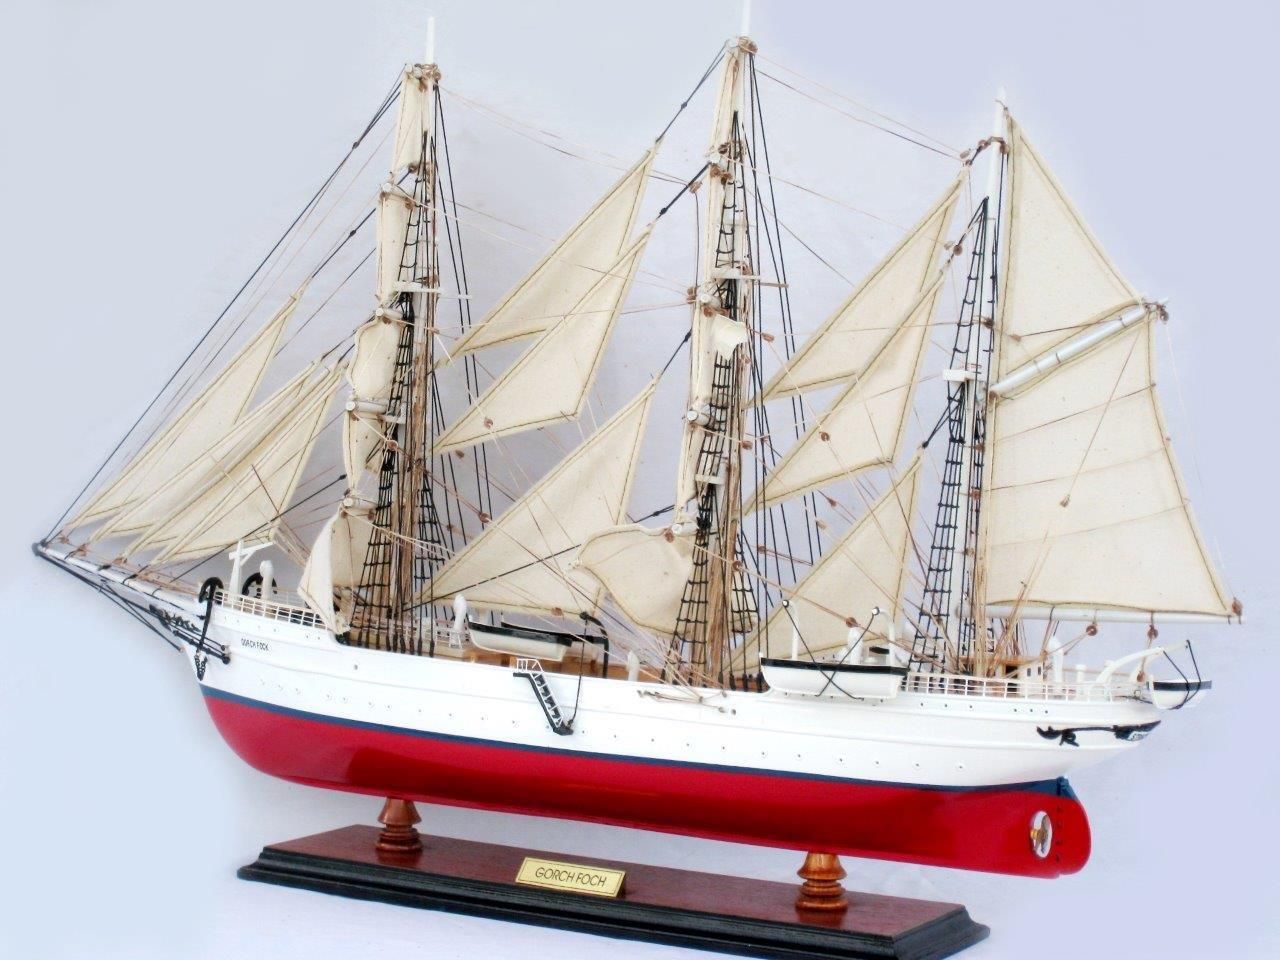 Gorch Fock I Wooden Model Ship - GN